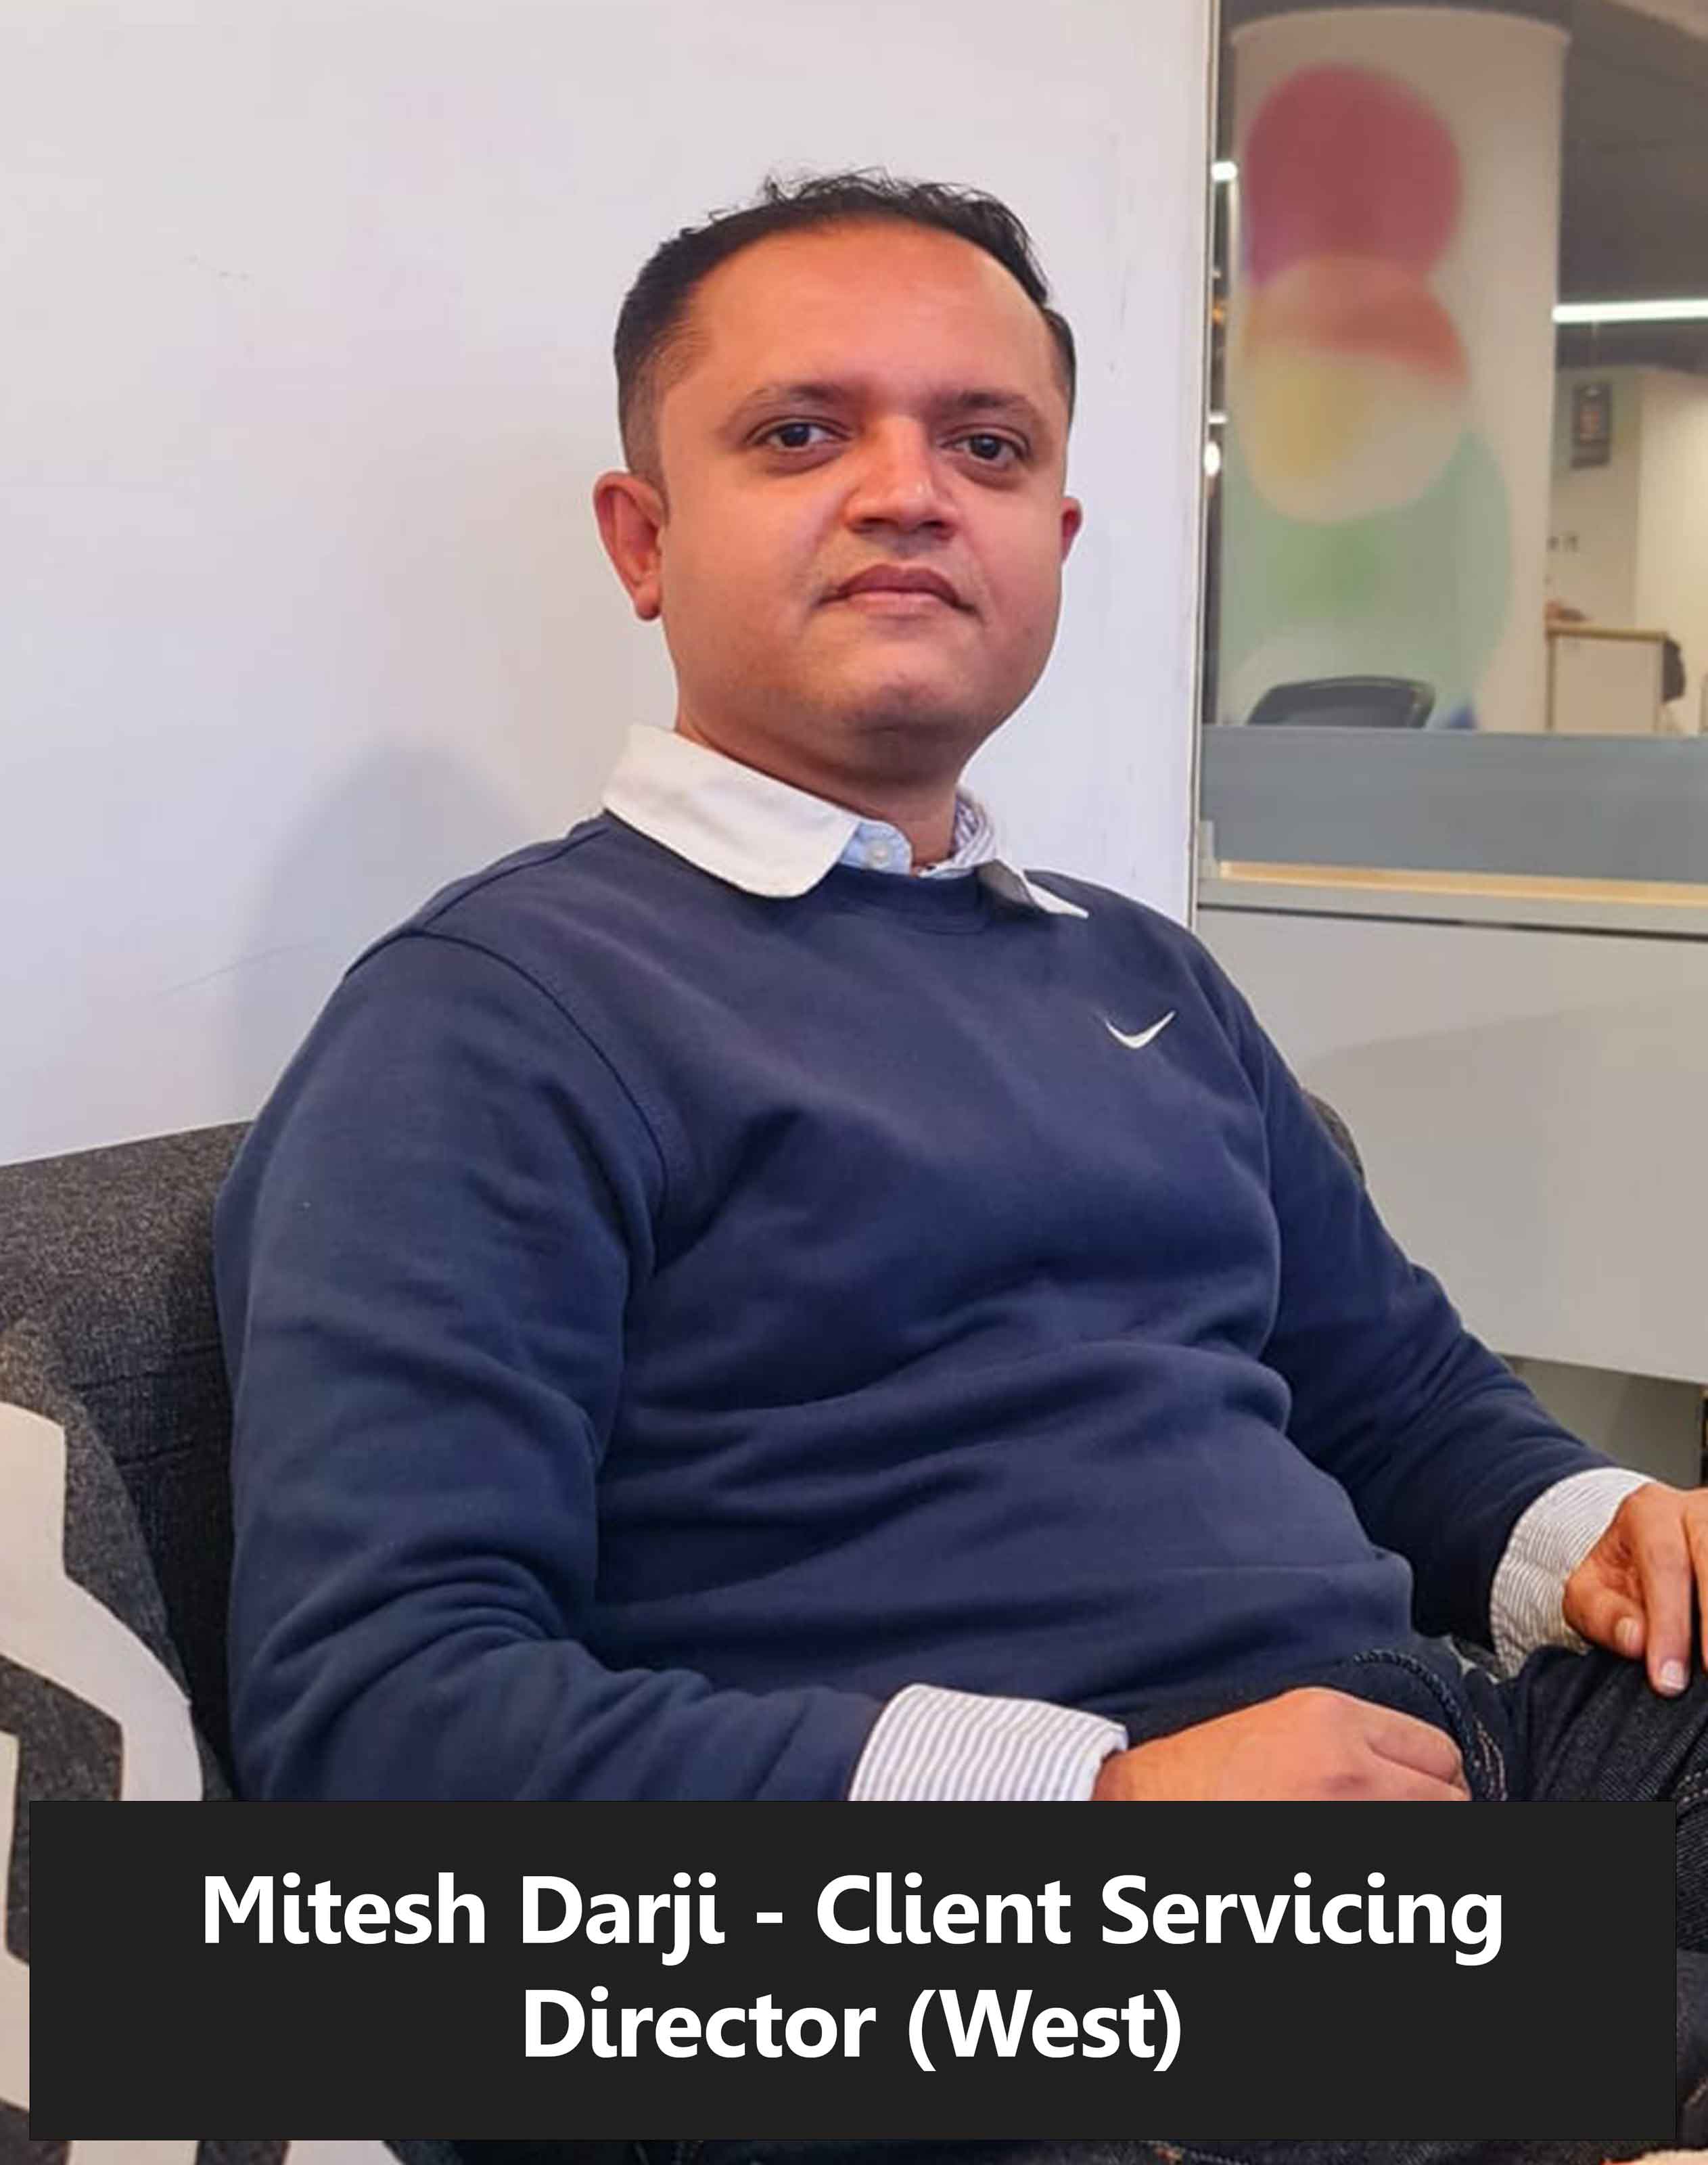 Mitesh Darji, Client Servicing Director